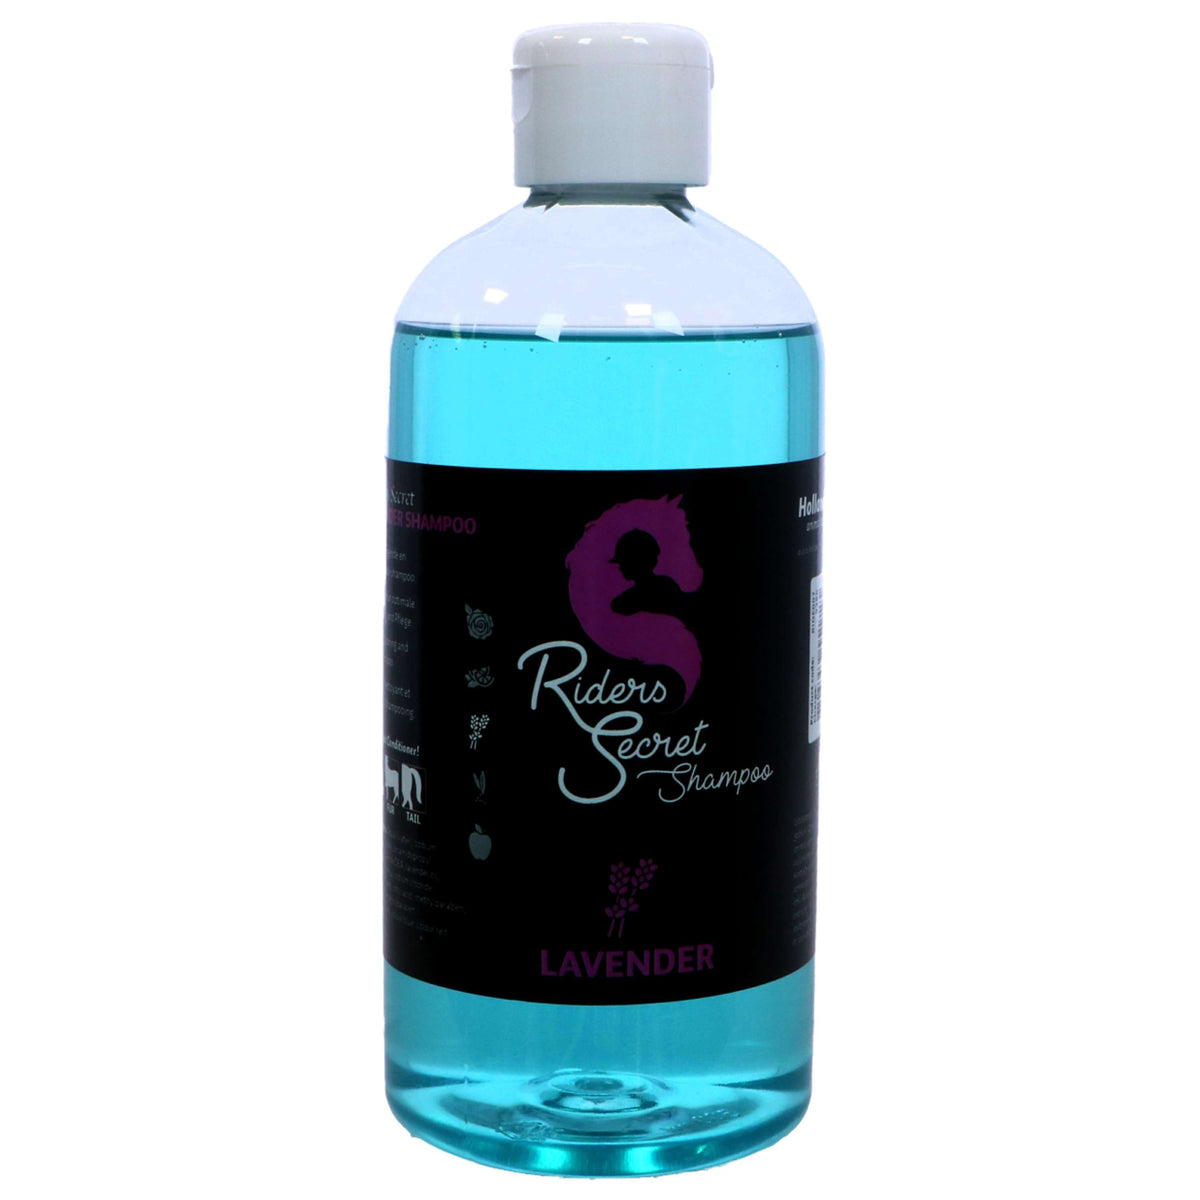 Riders Secret Shampoo Lavendel